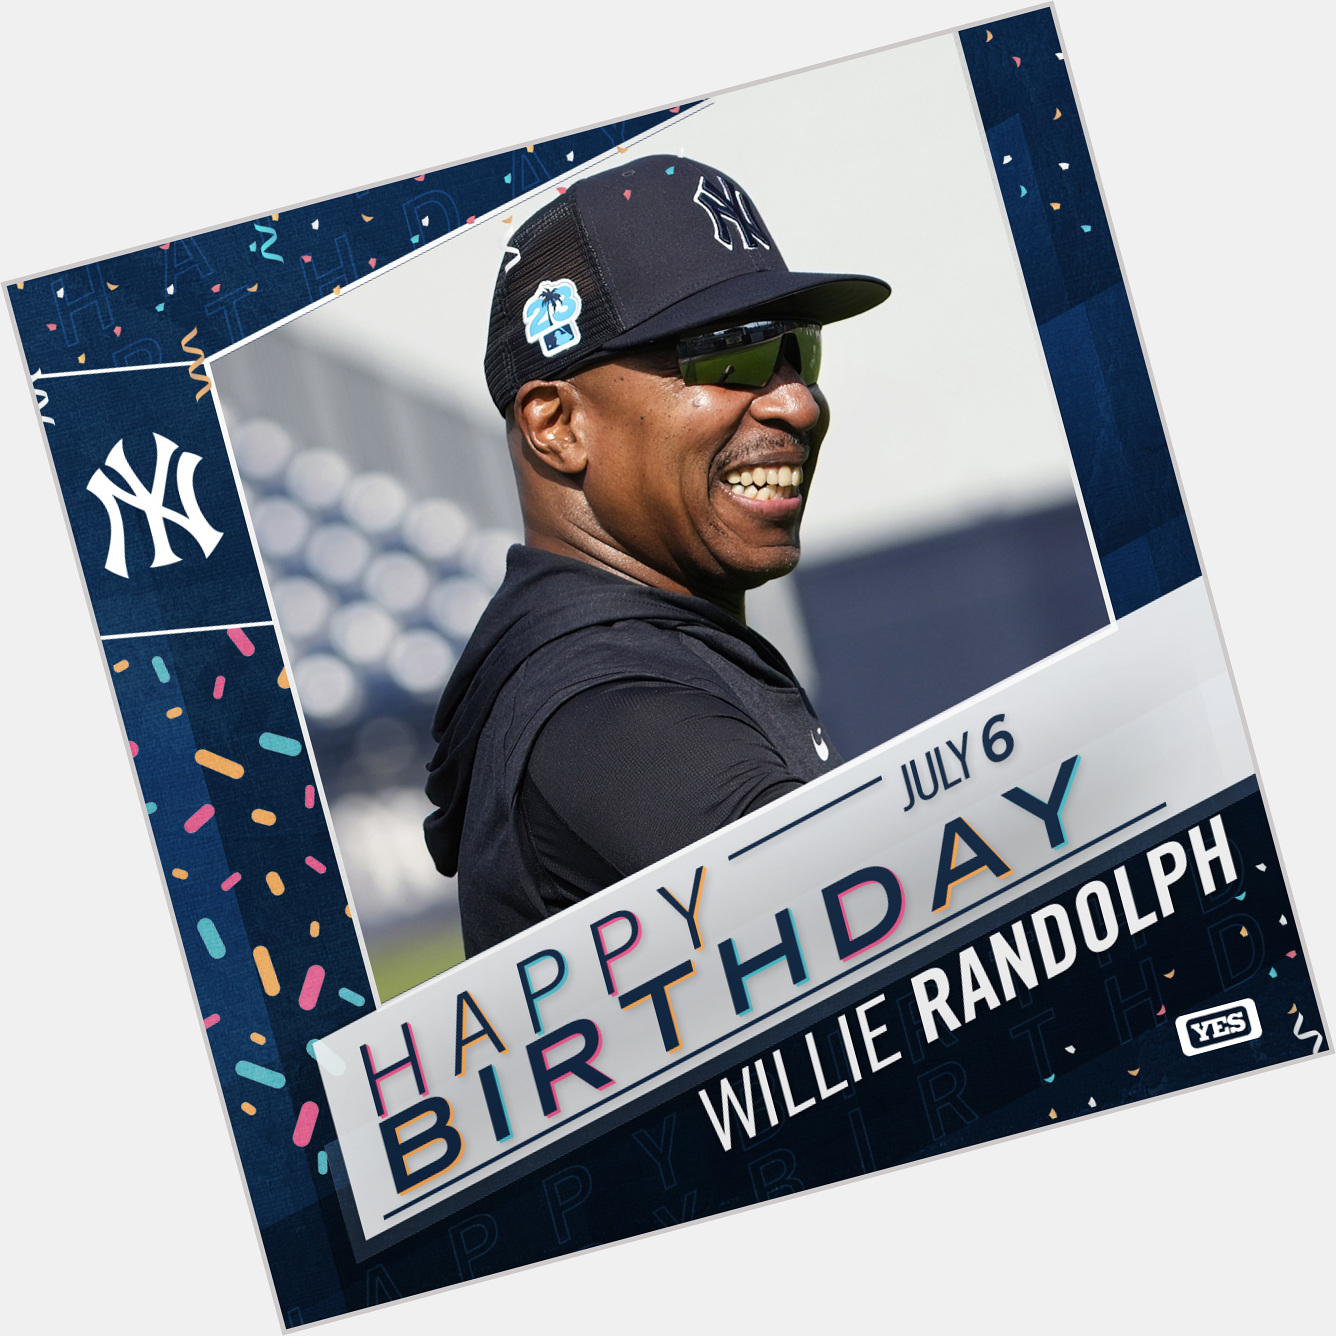 Happy birthday, Willie Randolph! 